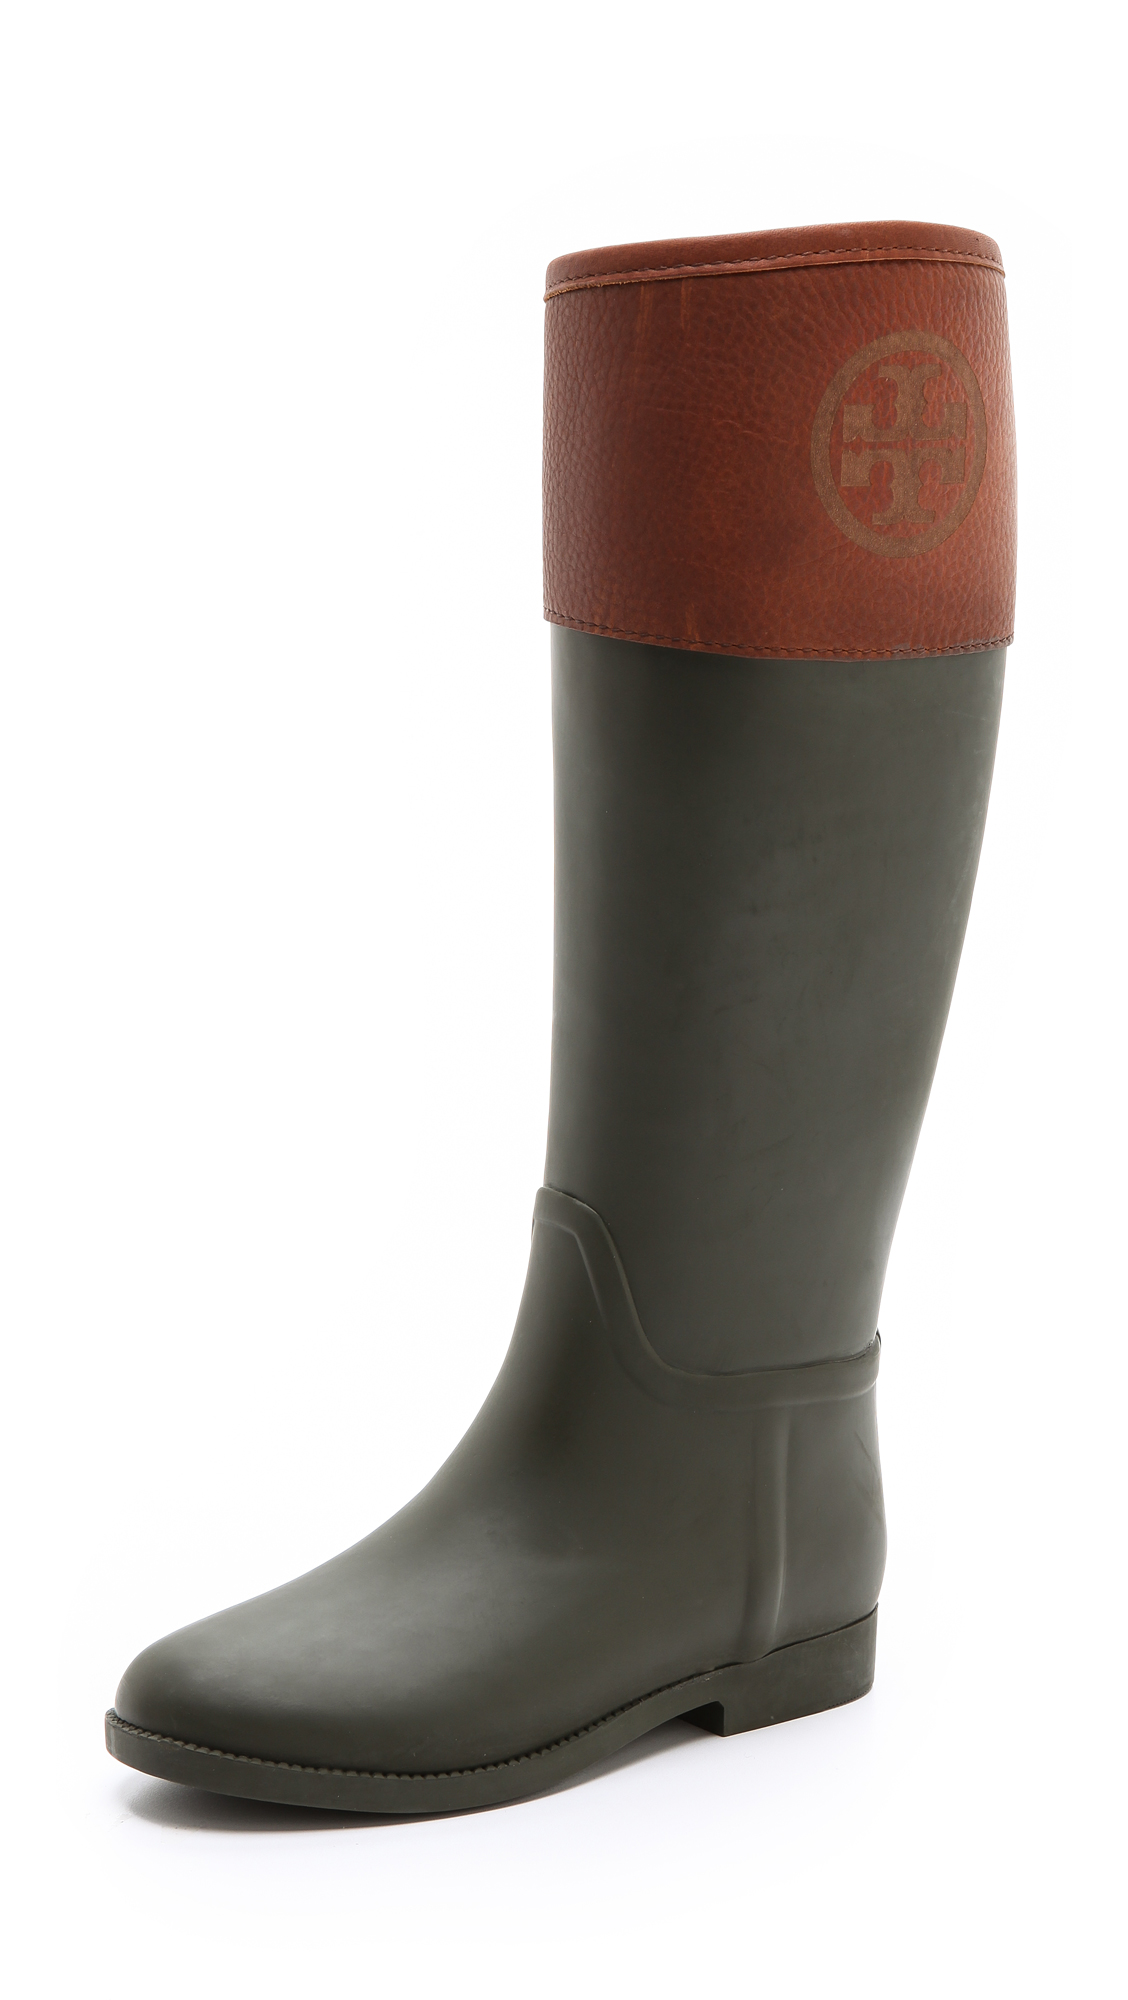 Lyst - Tory Burch Diana Rain Boots in Green1128 x 2000